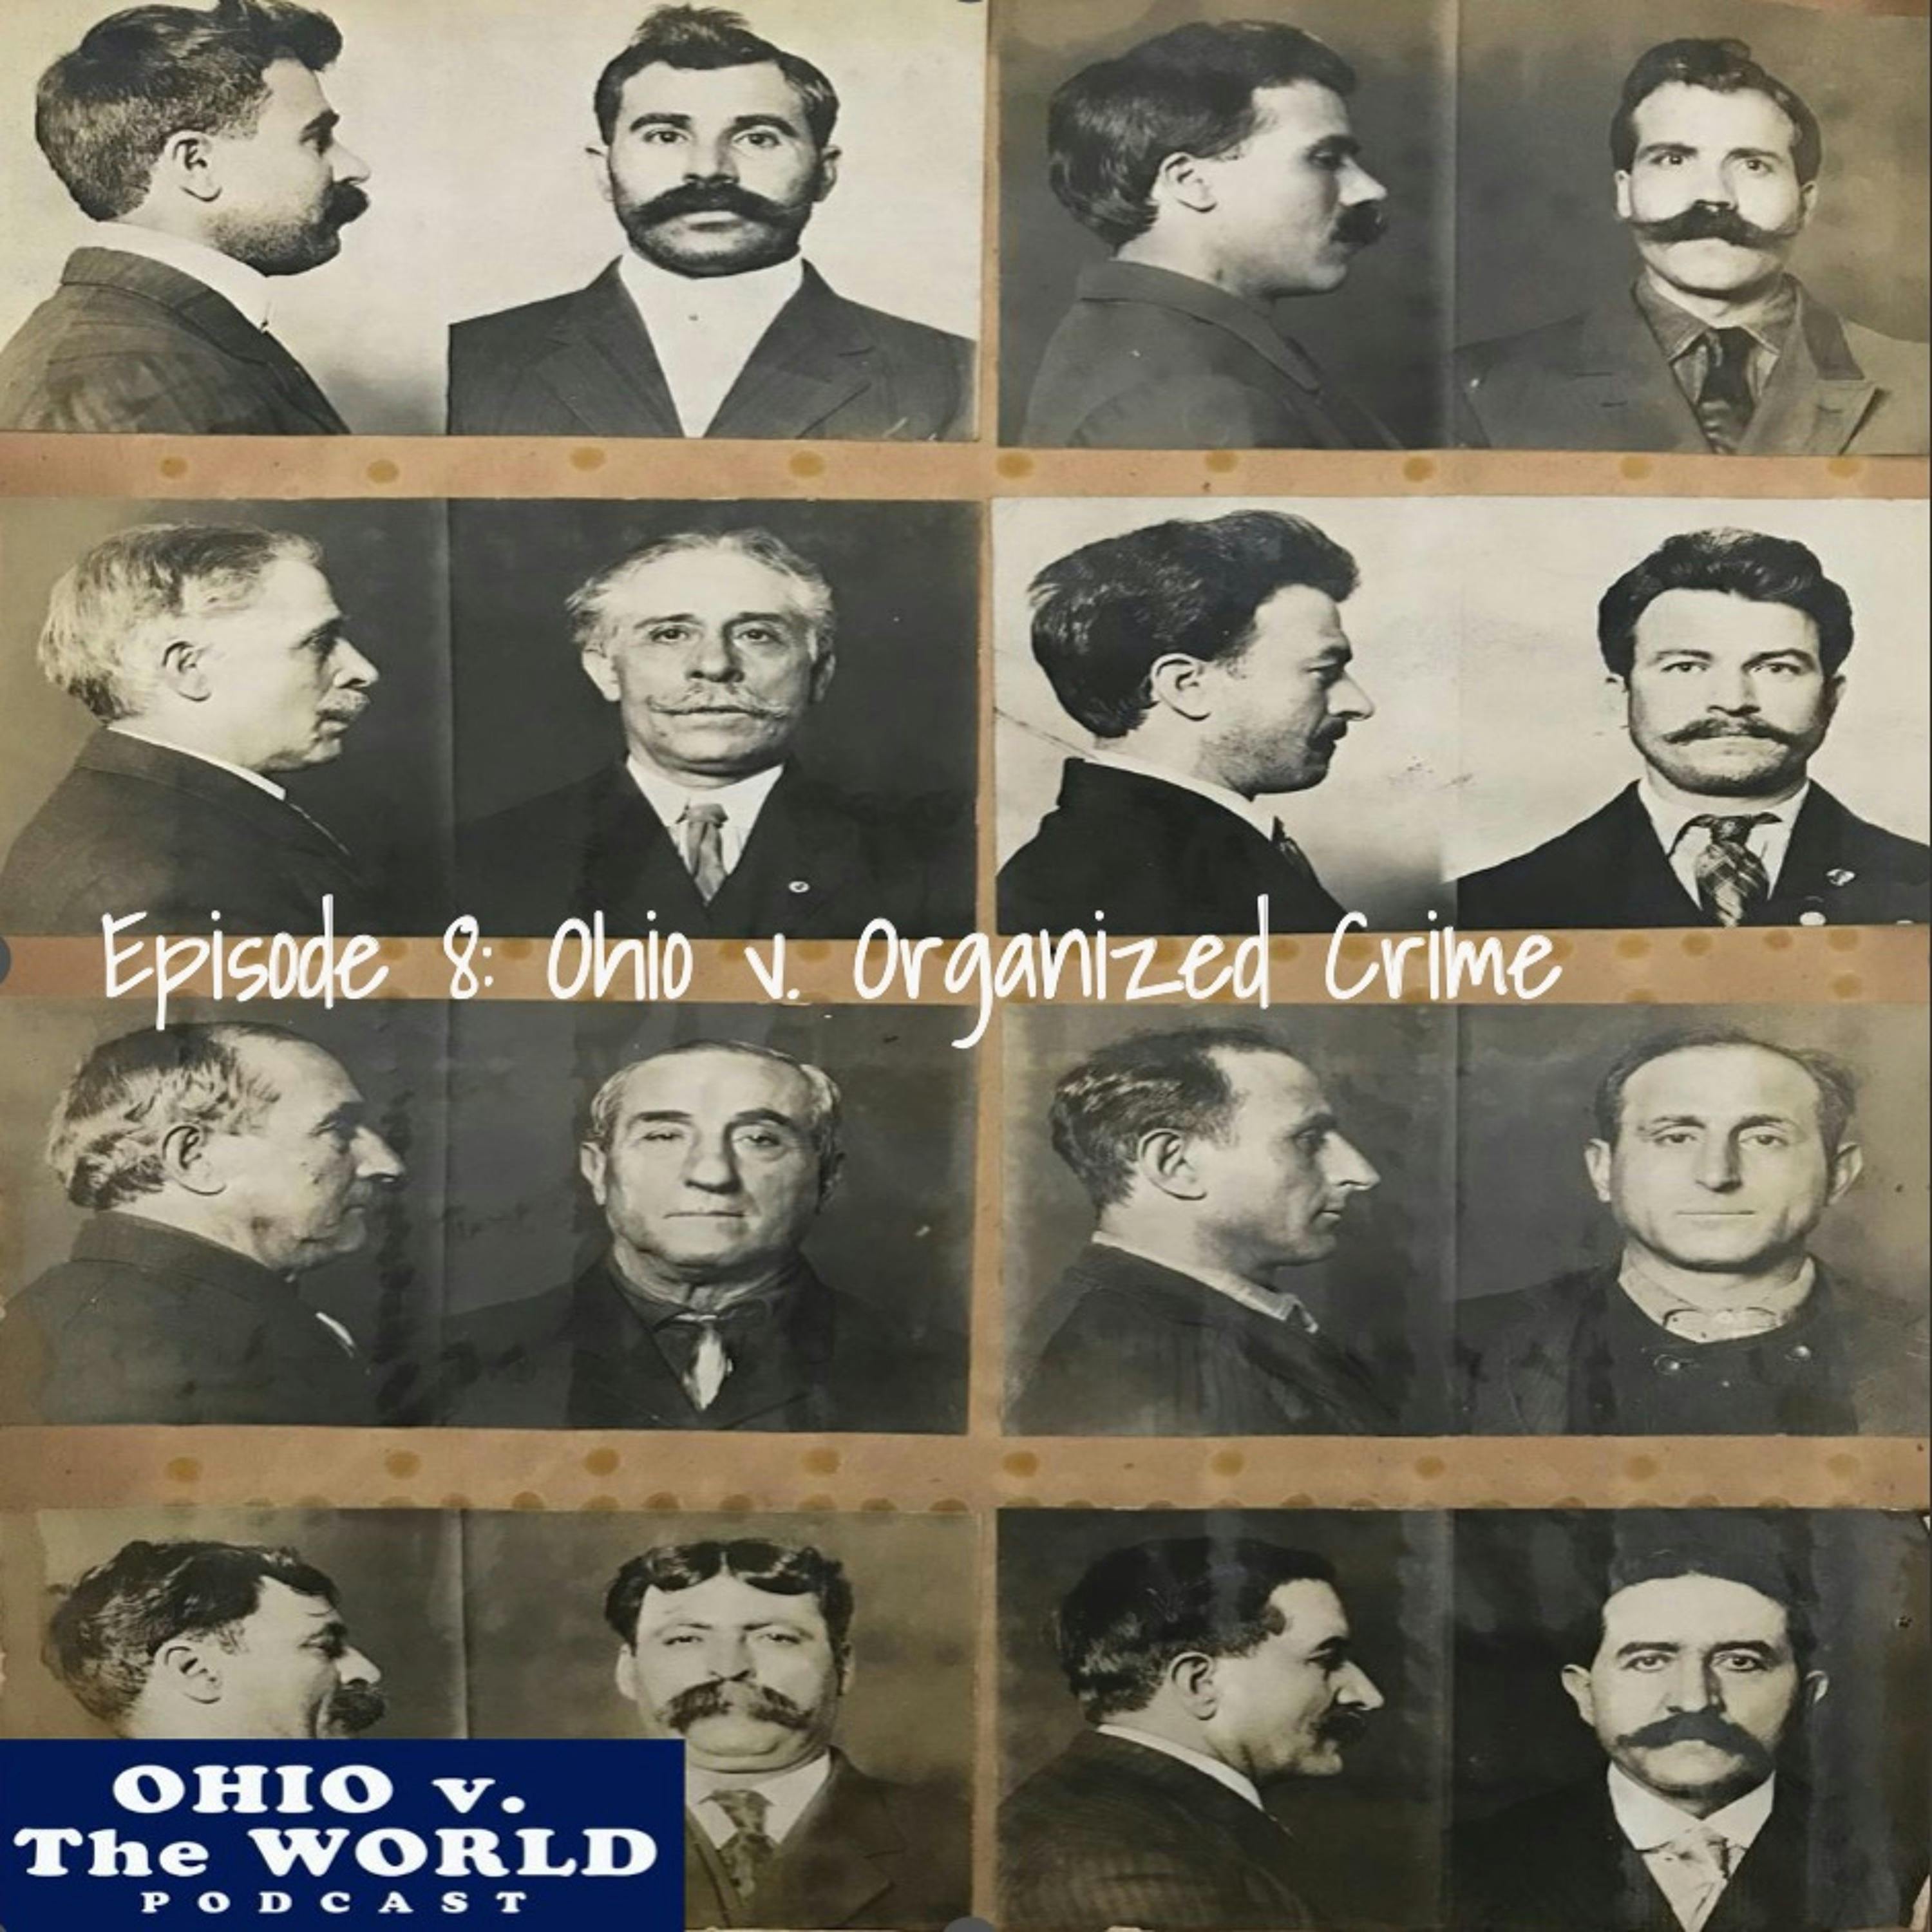 Episode 8: Ohio v. Organized Crime (Black Hand Society)